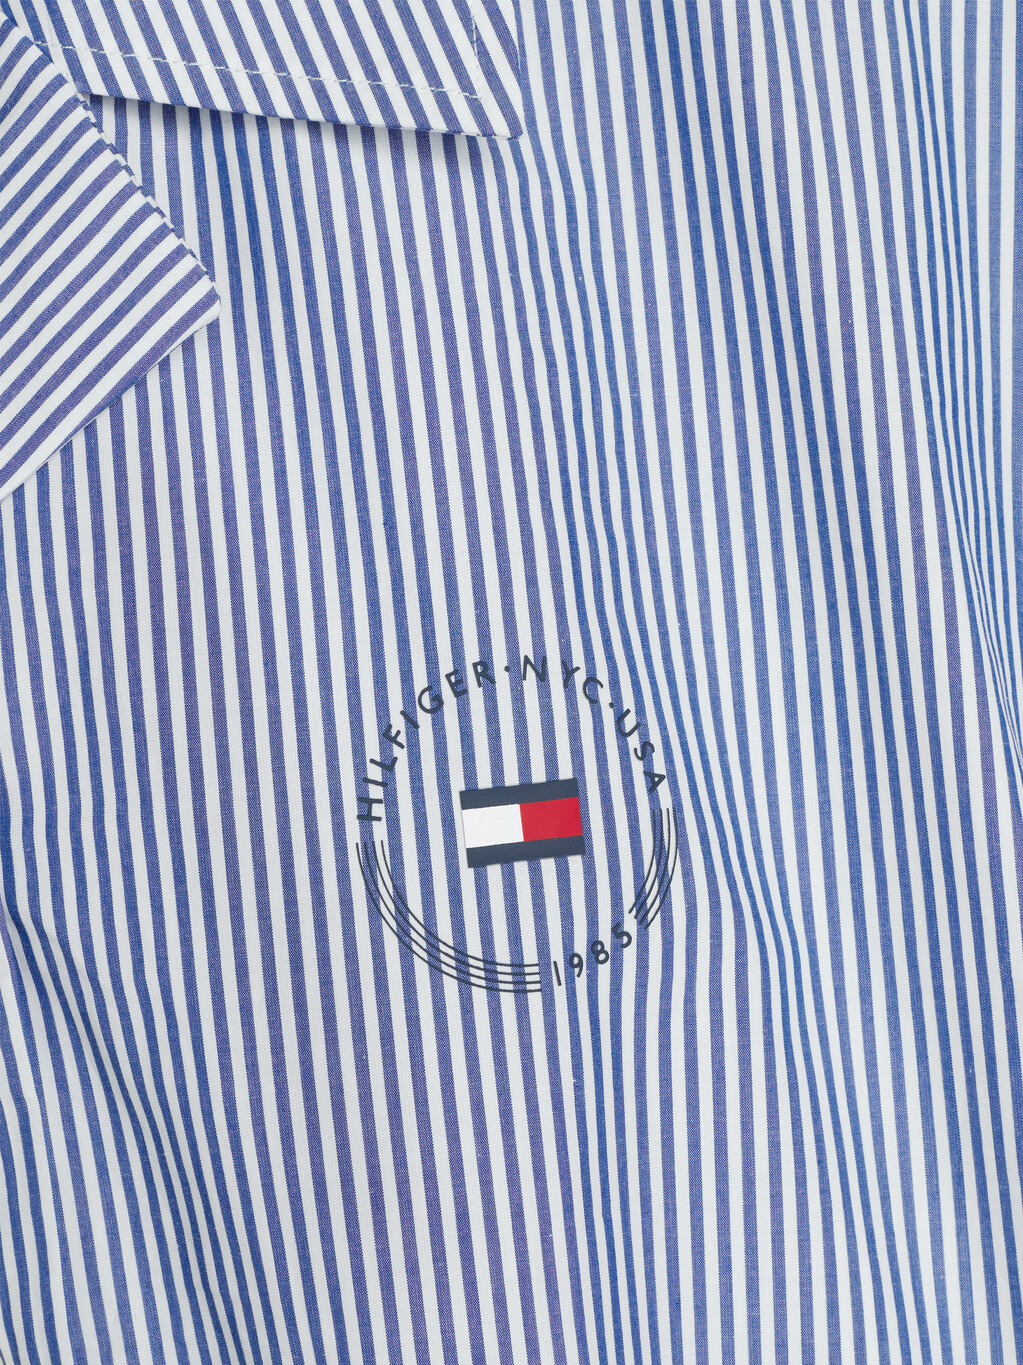 Hilfiger Team 短袖短版襯衫, Ultra Blue/Ithaca, hi-res